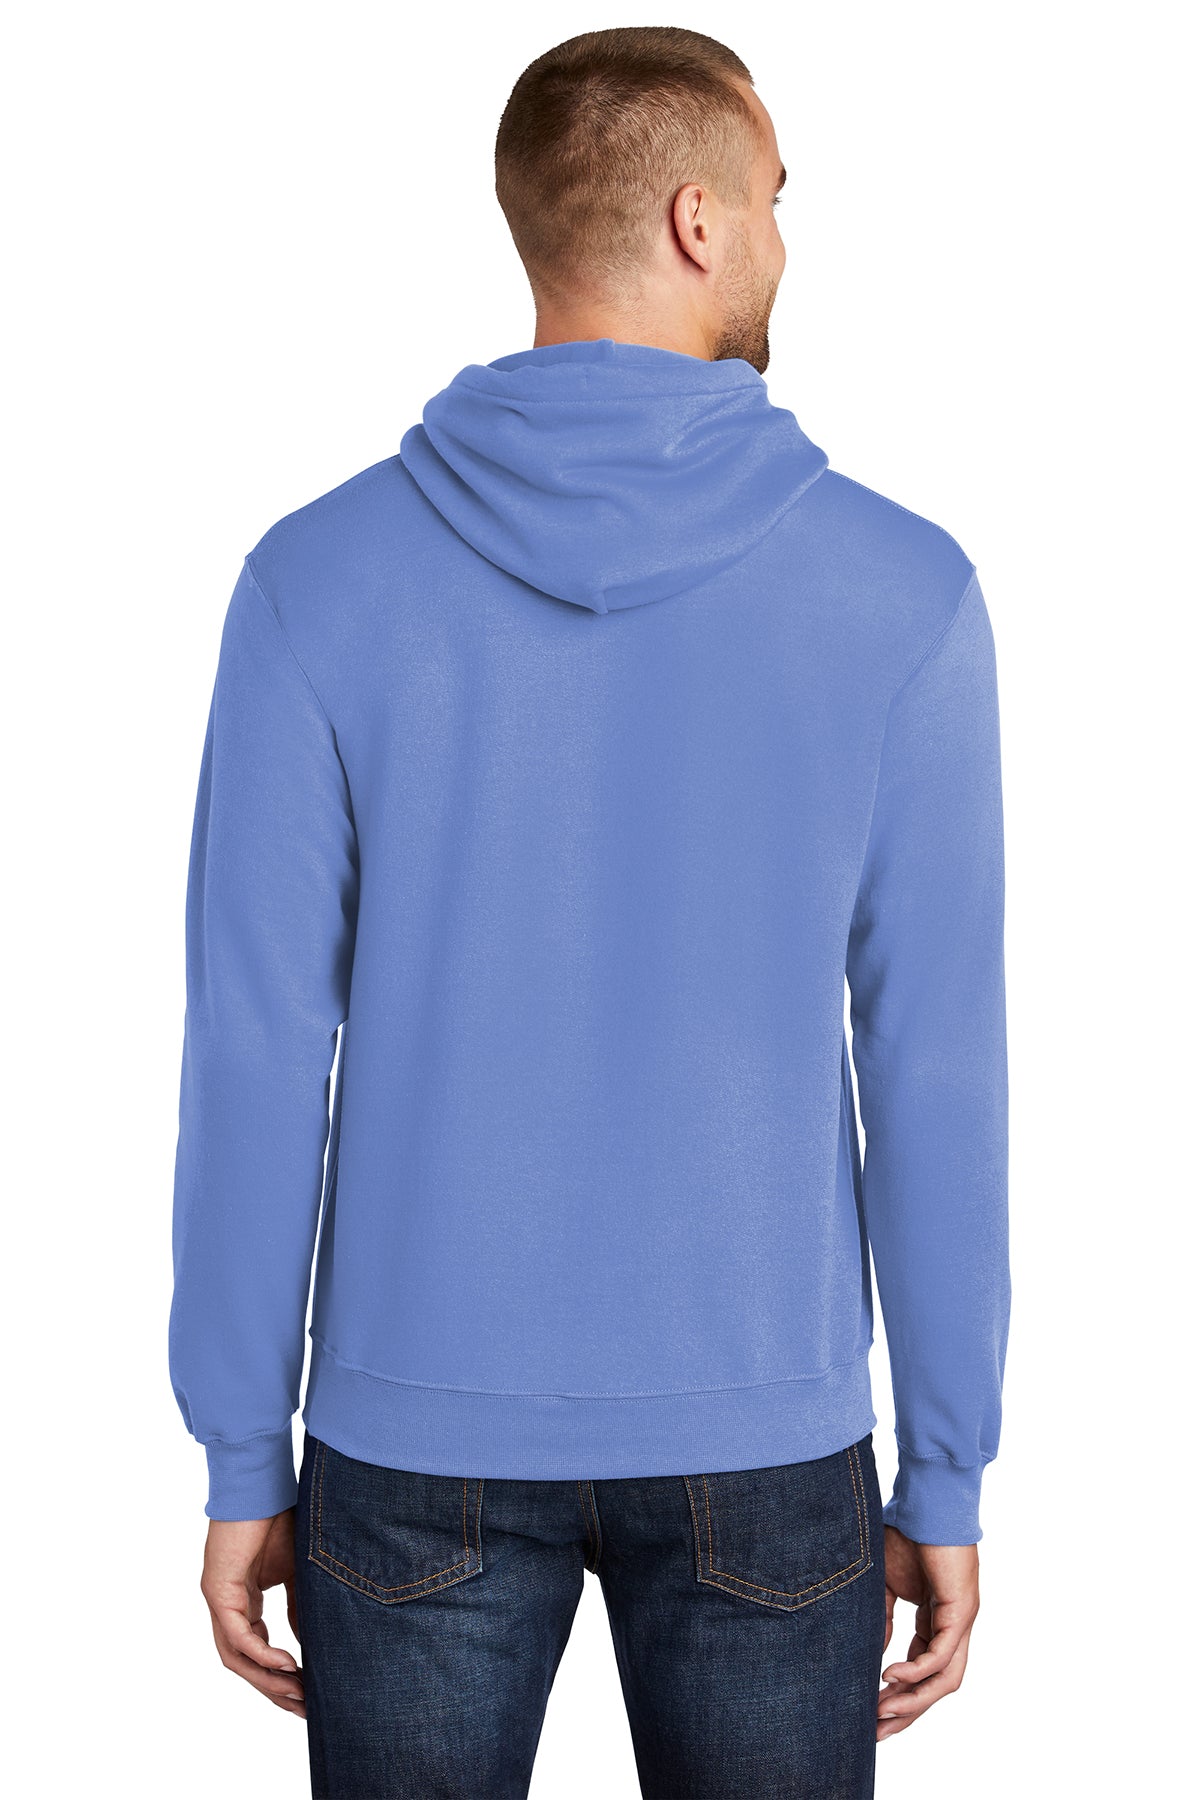 Port & Company PC78H Mens Core Fleece Hooded Sweatshirt Hoodie Carolina Blue Back